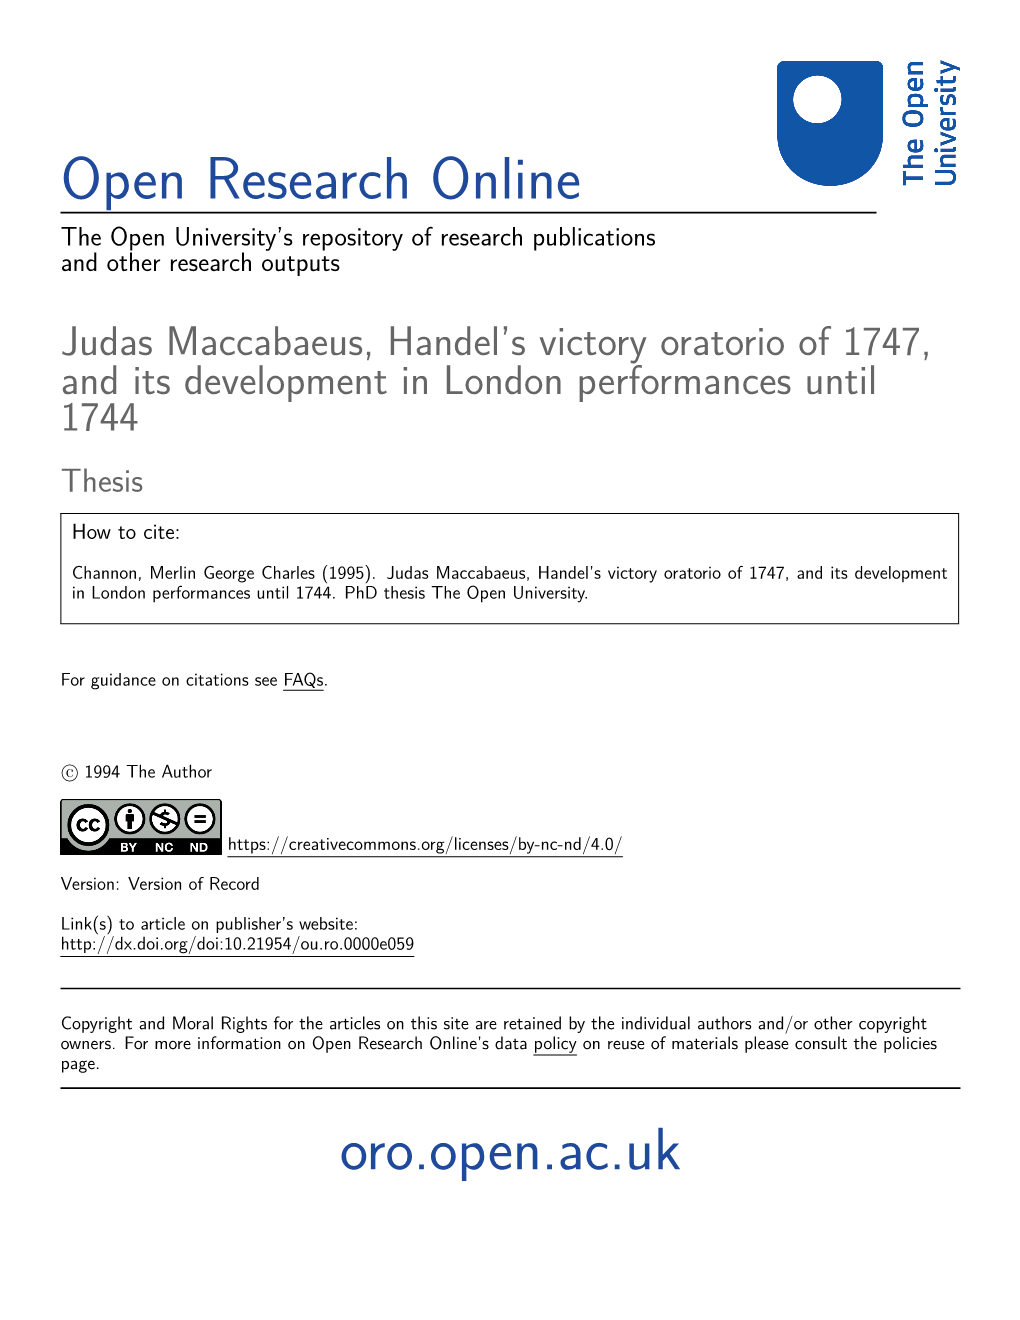 Judas Maccabaeus, Handel's Victory Oratorio of 1747, and Its Development in London Performances Until 1744